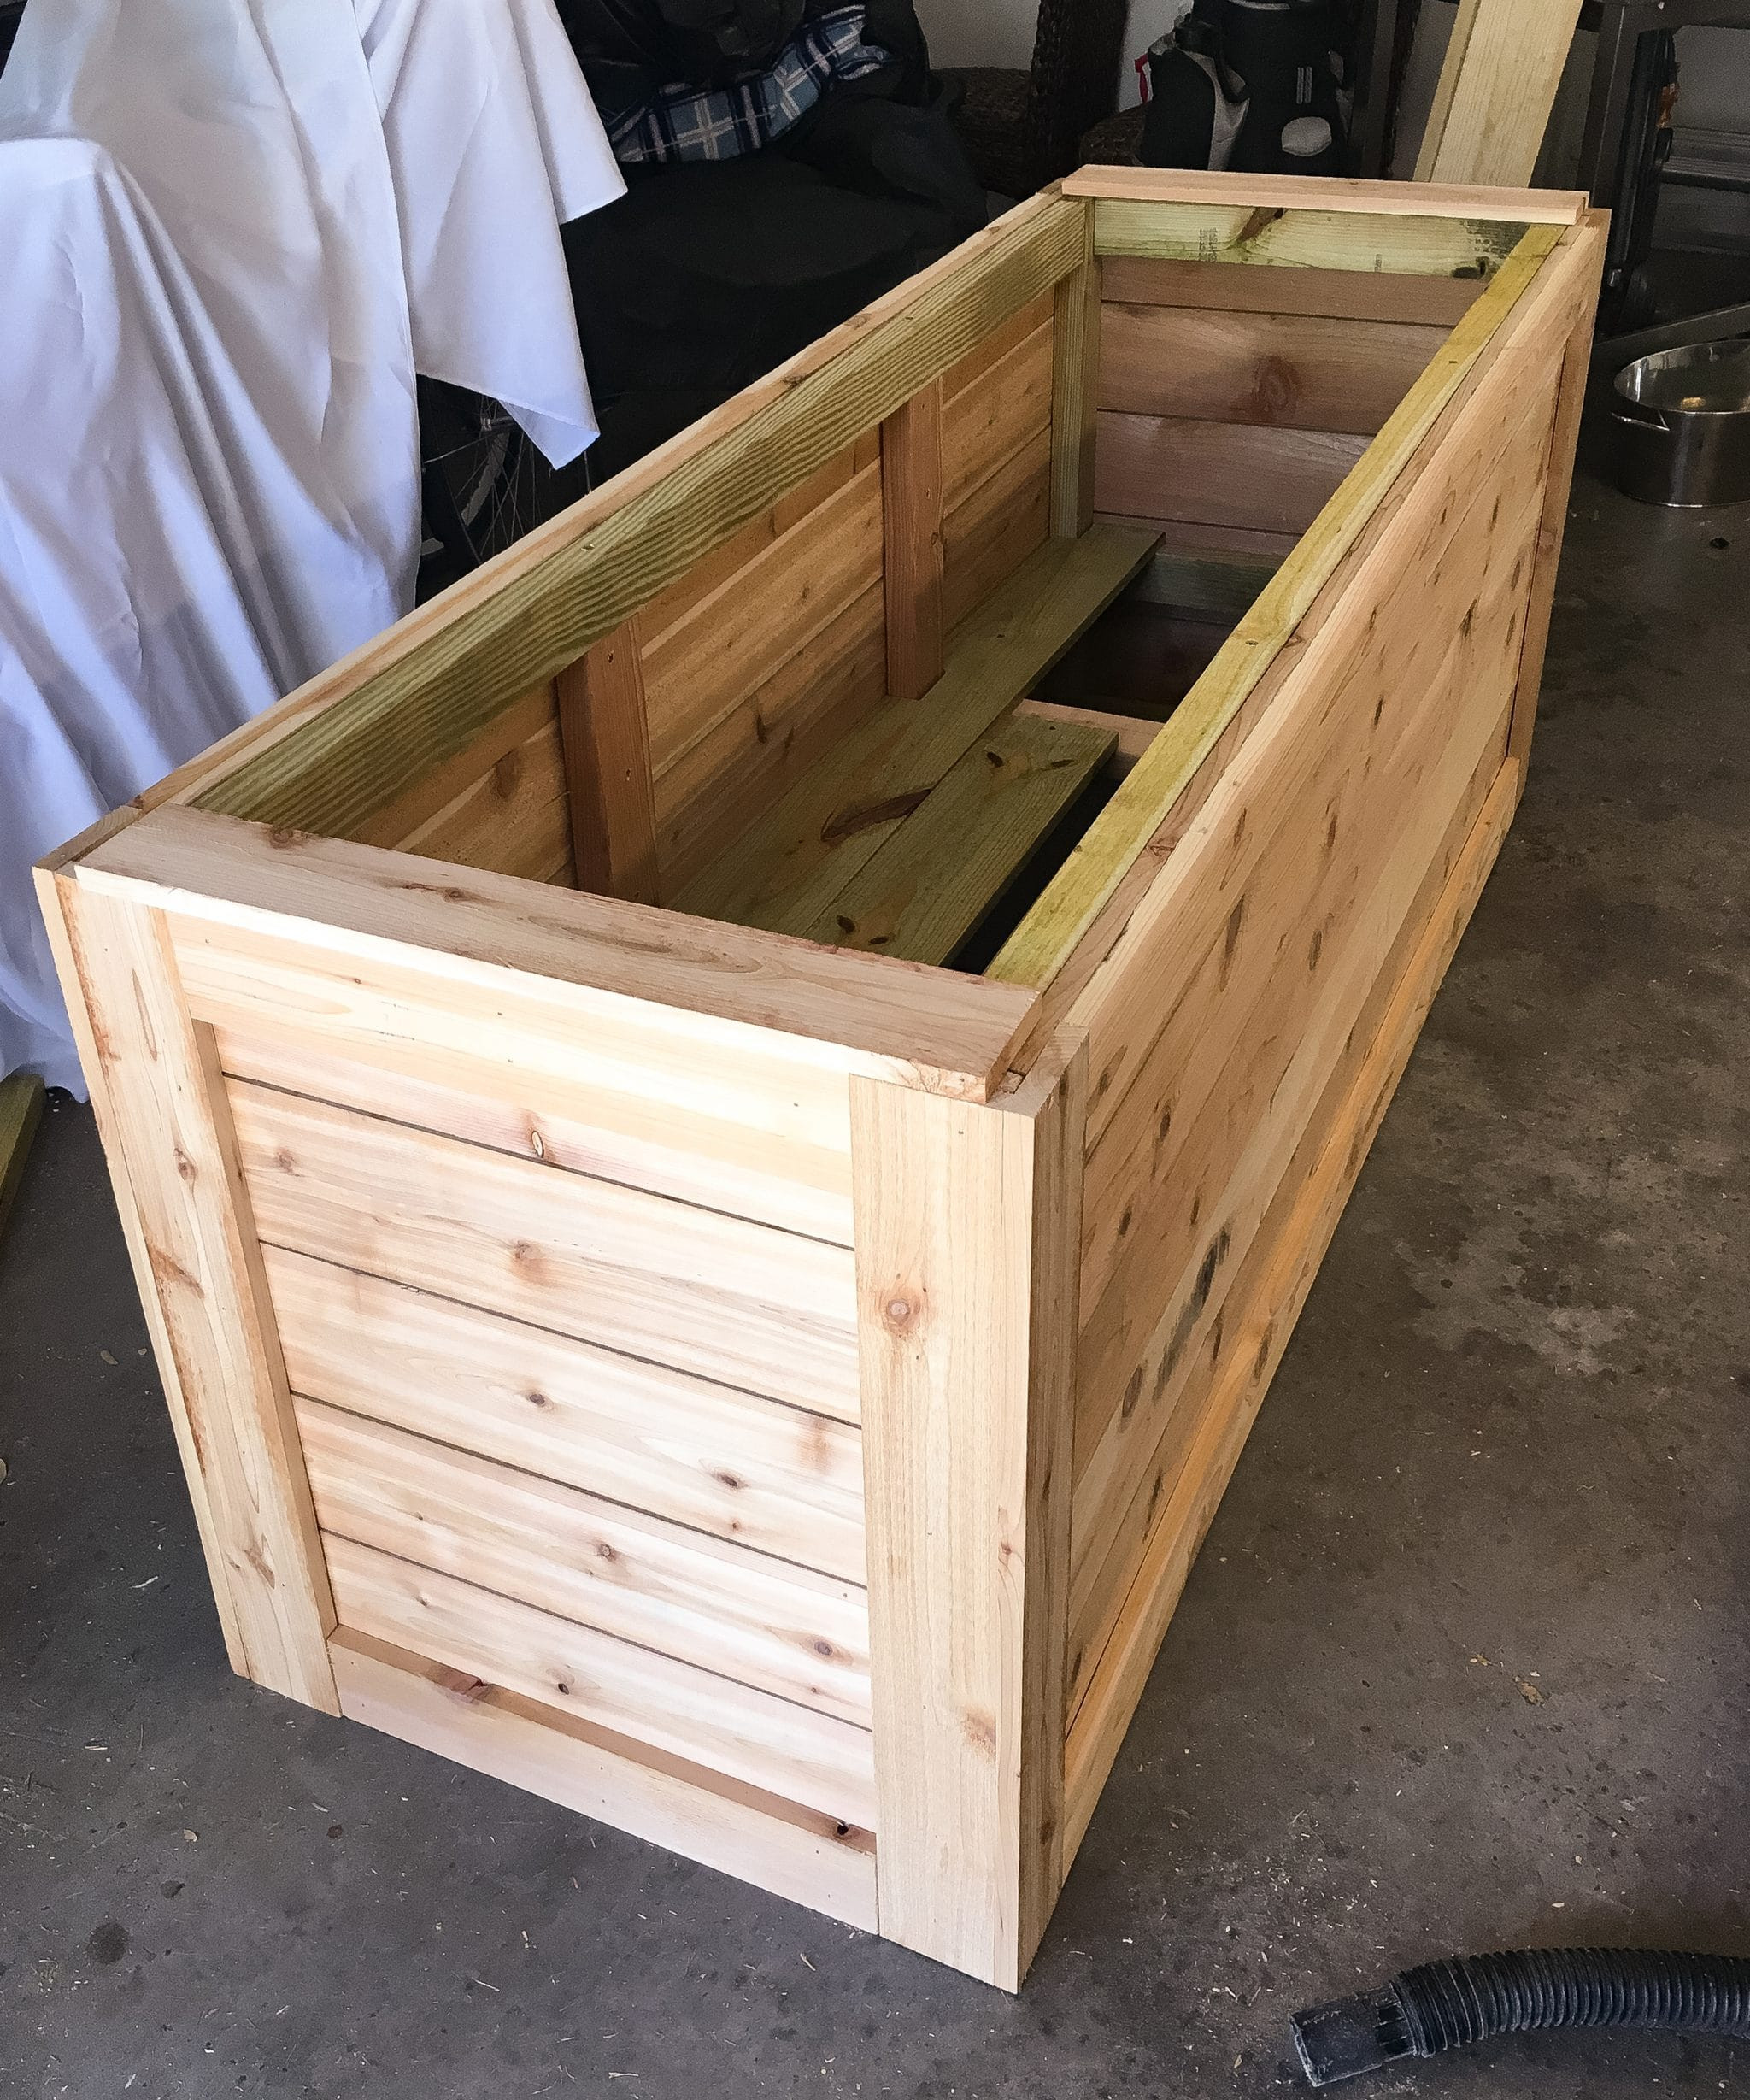 Best ideas about DIY Wooden Planters
. Save or Pin BACKYARD DIY SERIES PART IIII Cedar Wood Planter Box Now.